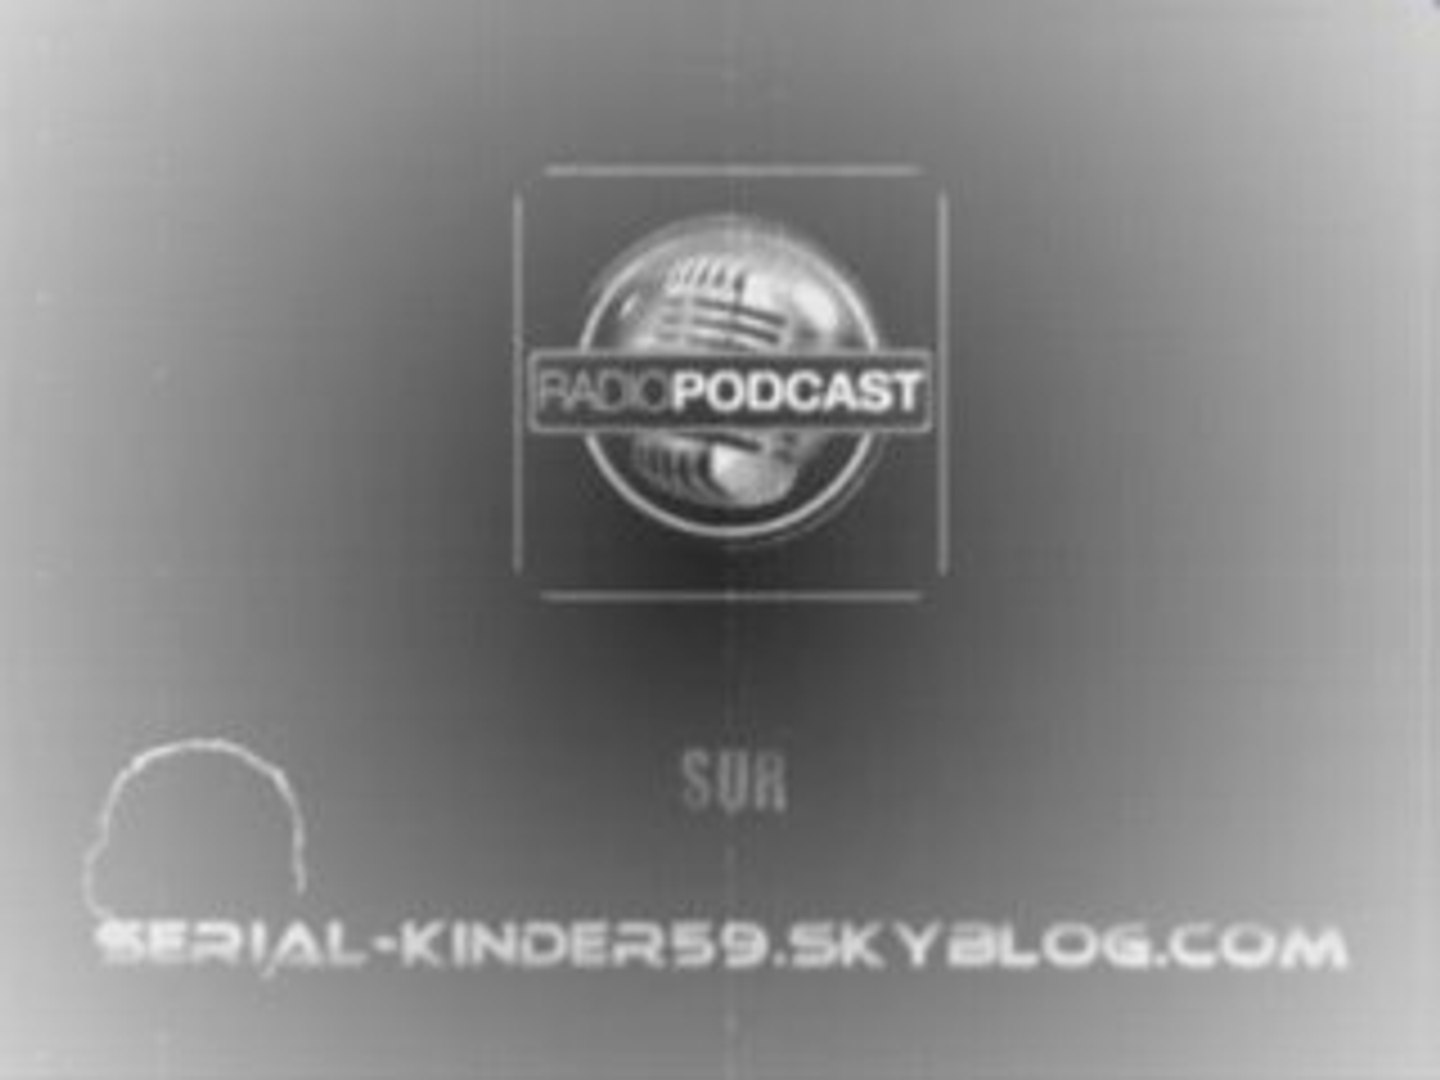 Radio podcast - Titi et Fifounet / Serial-Kinder - Vidéo Dailymotion